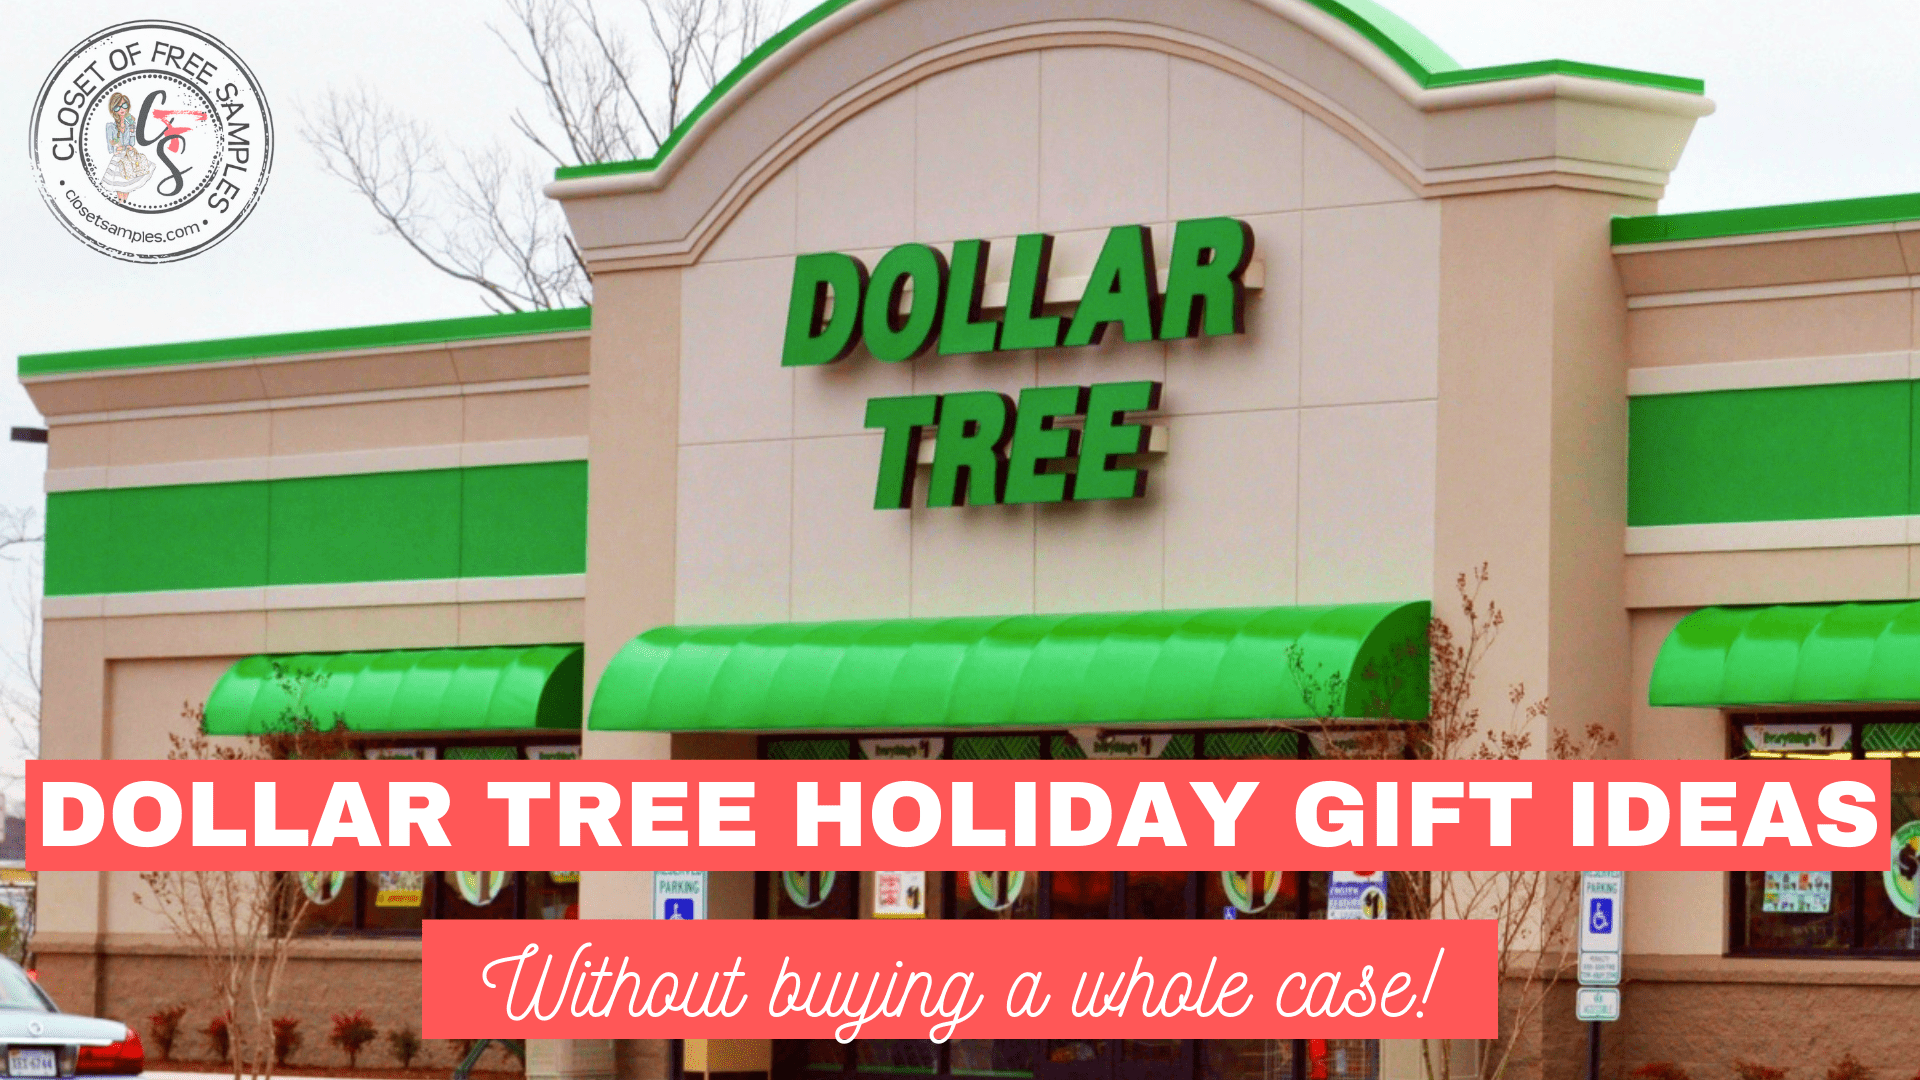 Dollar Tree Holiday Gift Ideas...